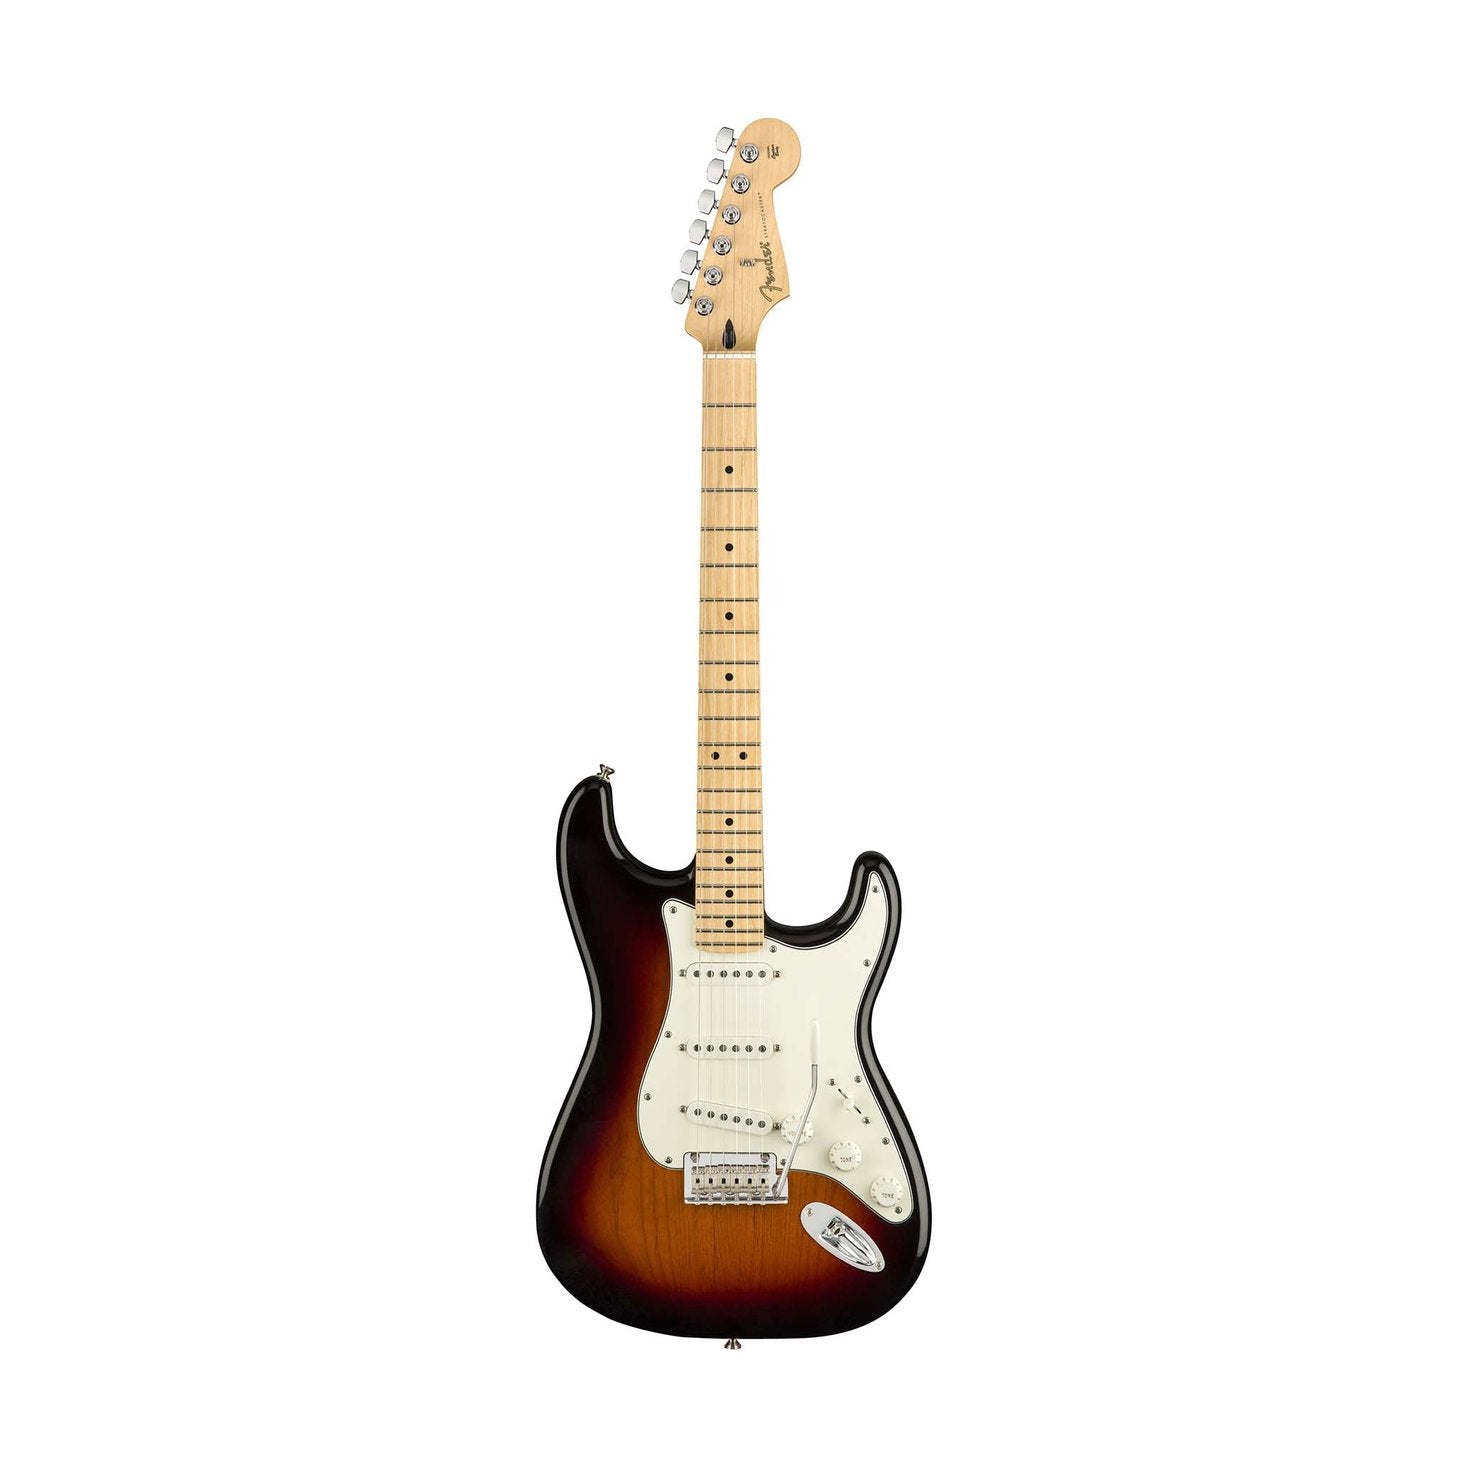 Fender Player Stratocaster Electric Guitar, Maple FB, 3-Tone Sunburst, FENDER, ELECTRIC GUITAR, fender-eletric-guitar-f03-014-4502-500, ZOSO MUSIC SDN BHD